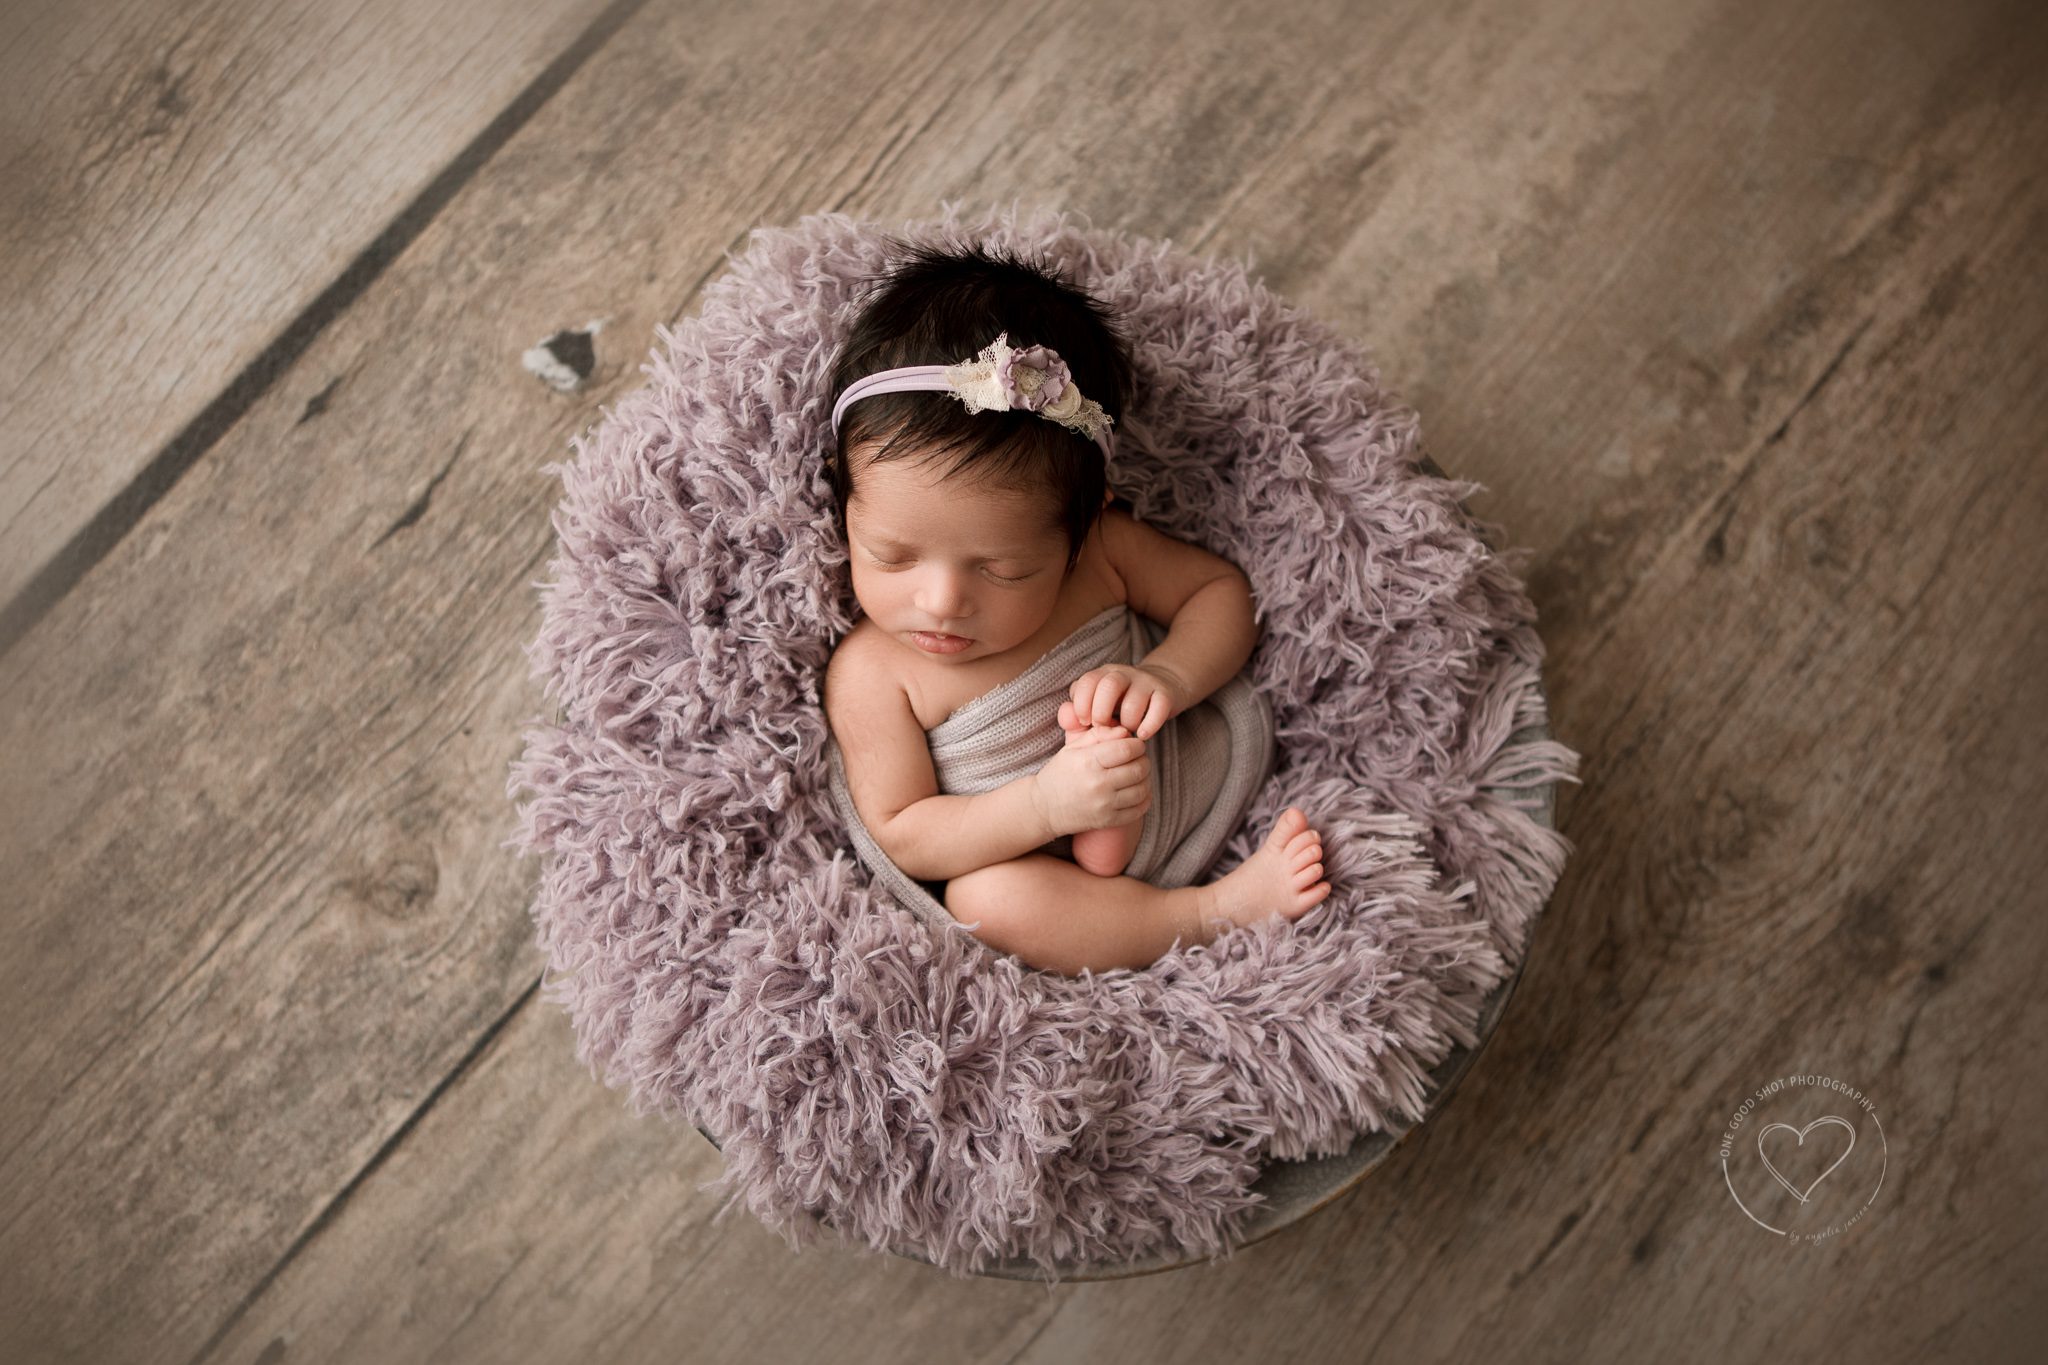 fresno clovis newborn photographer, baby girl, lavender props, wood floor backdrop, all the things pose, holding feet